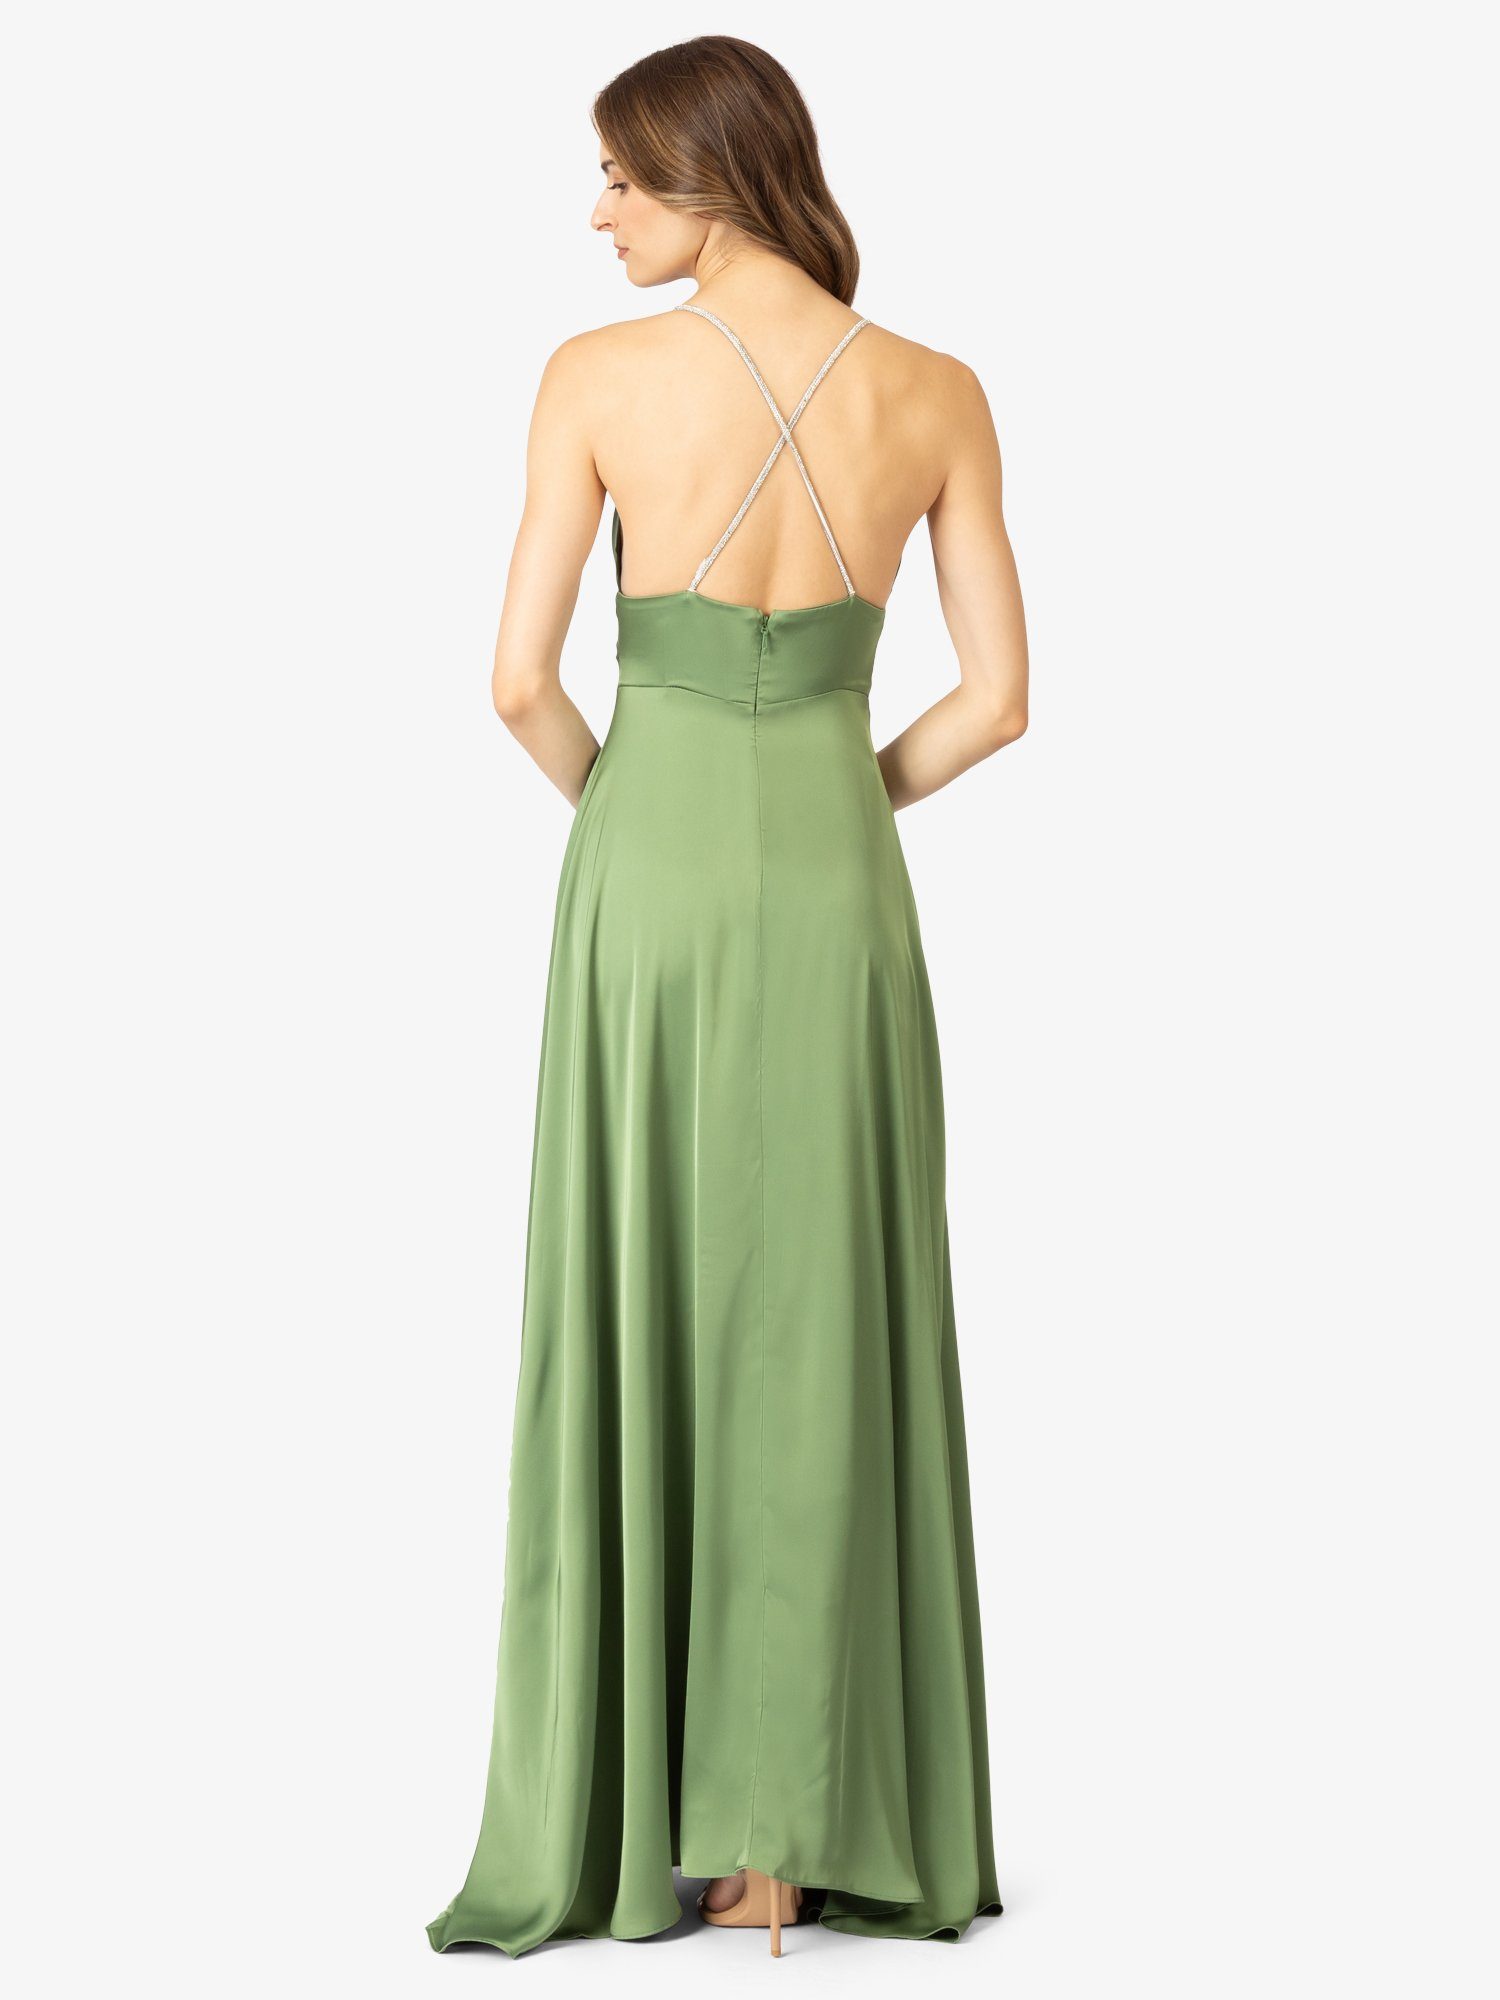 Stil mit elegantem hellgrün Apart Abendkleid